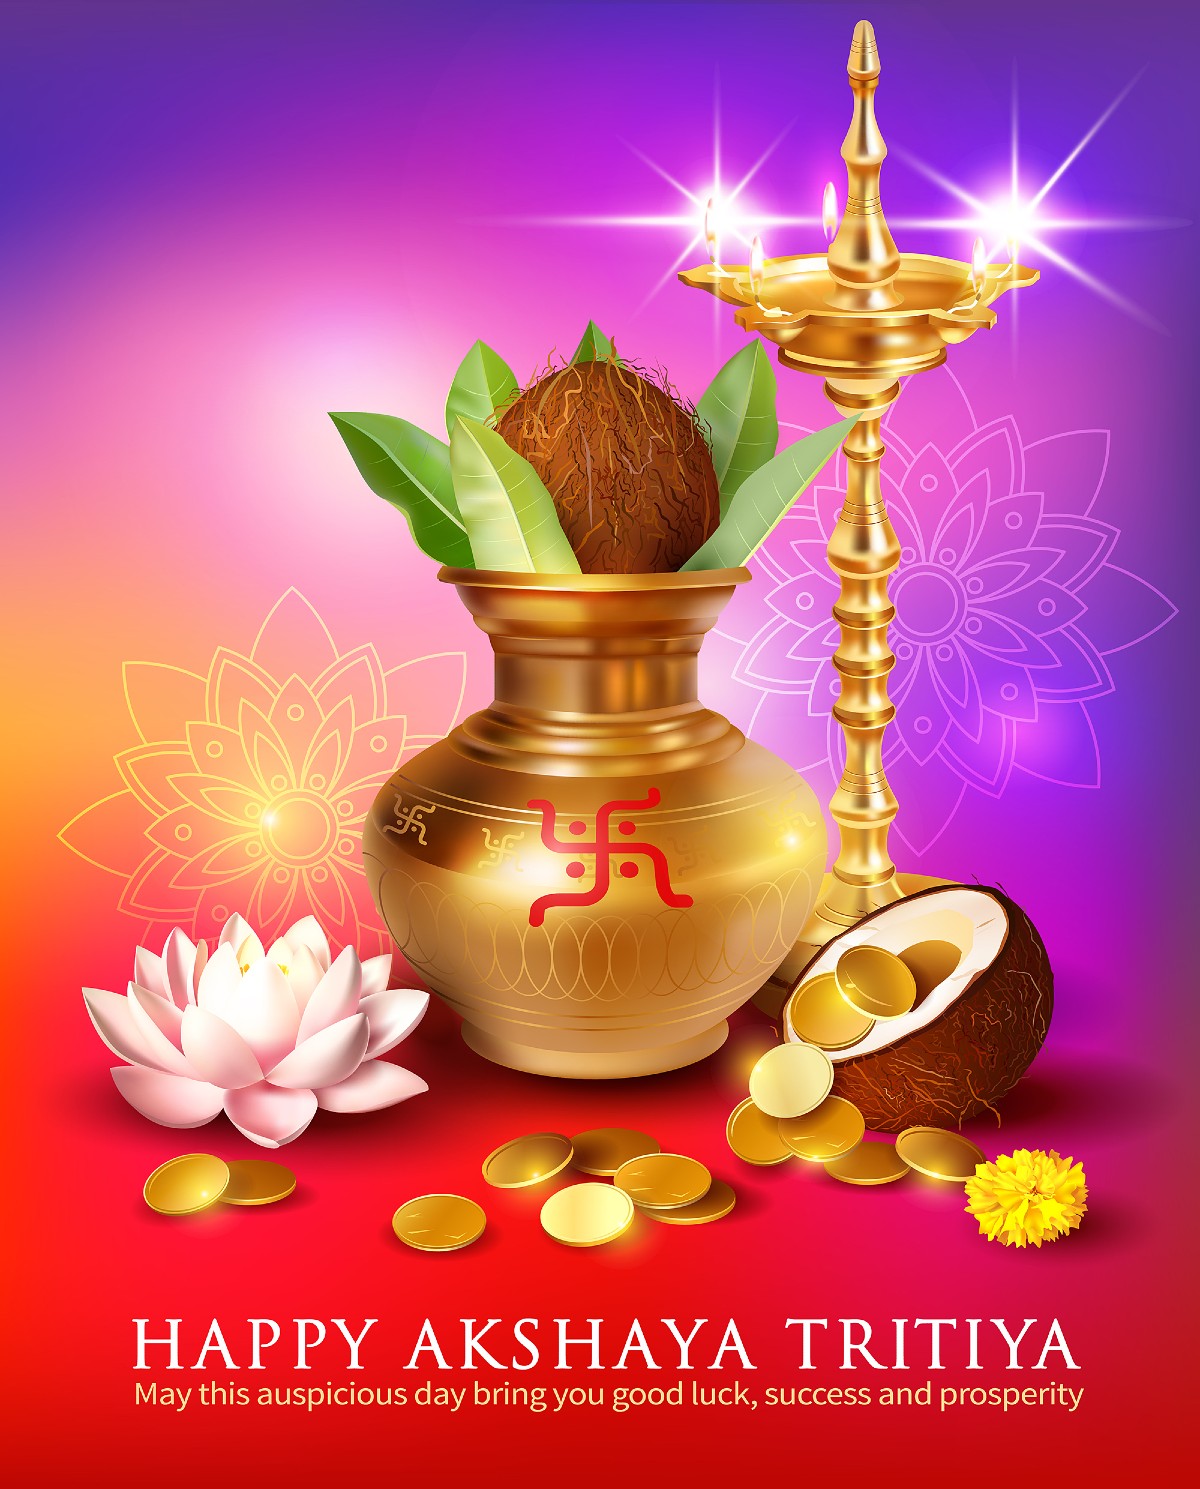 Akshaya Tritiya 2021: Images, Wishes, Quotes, Status, Messages, Photos and Greetings